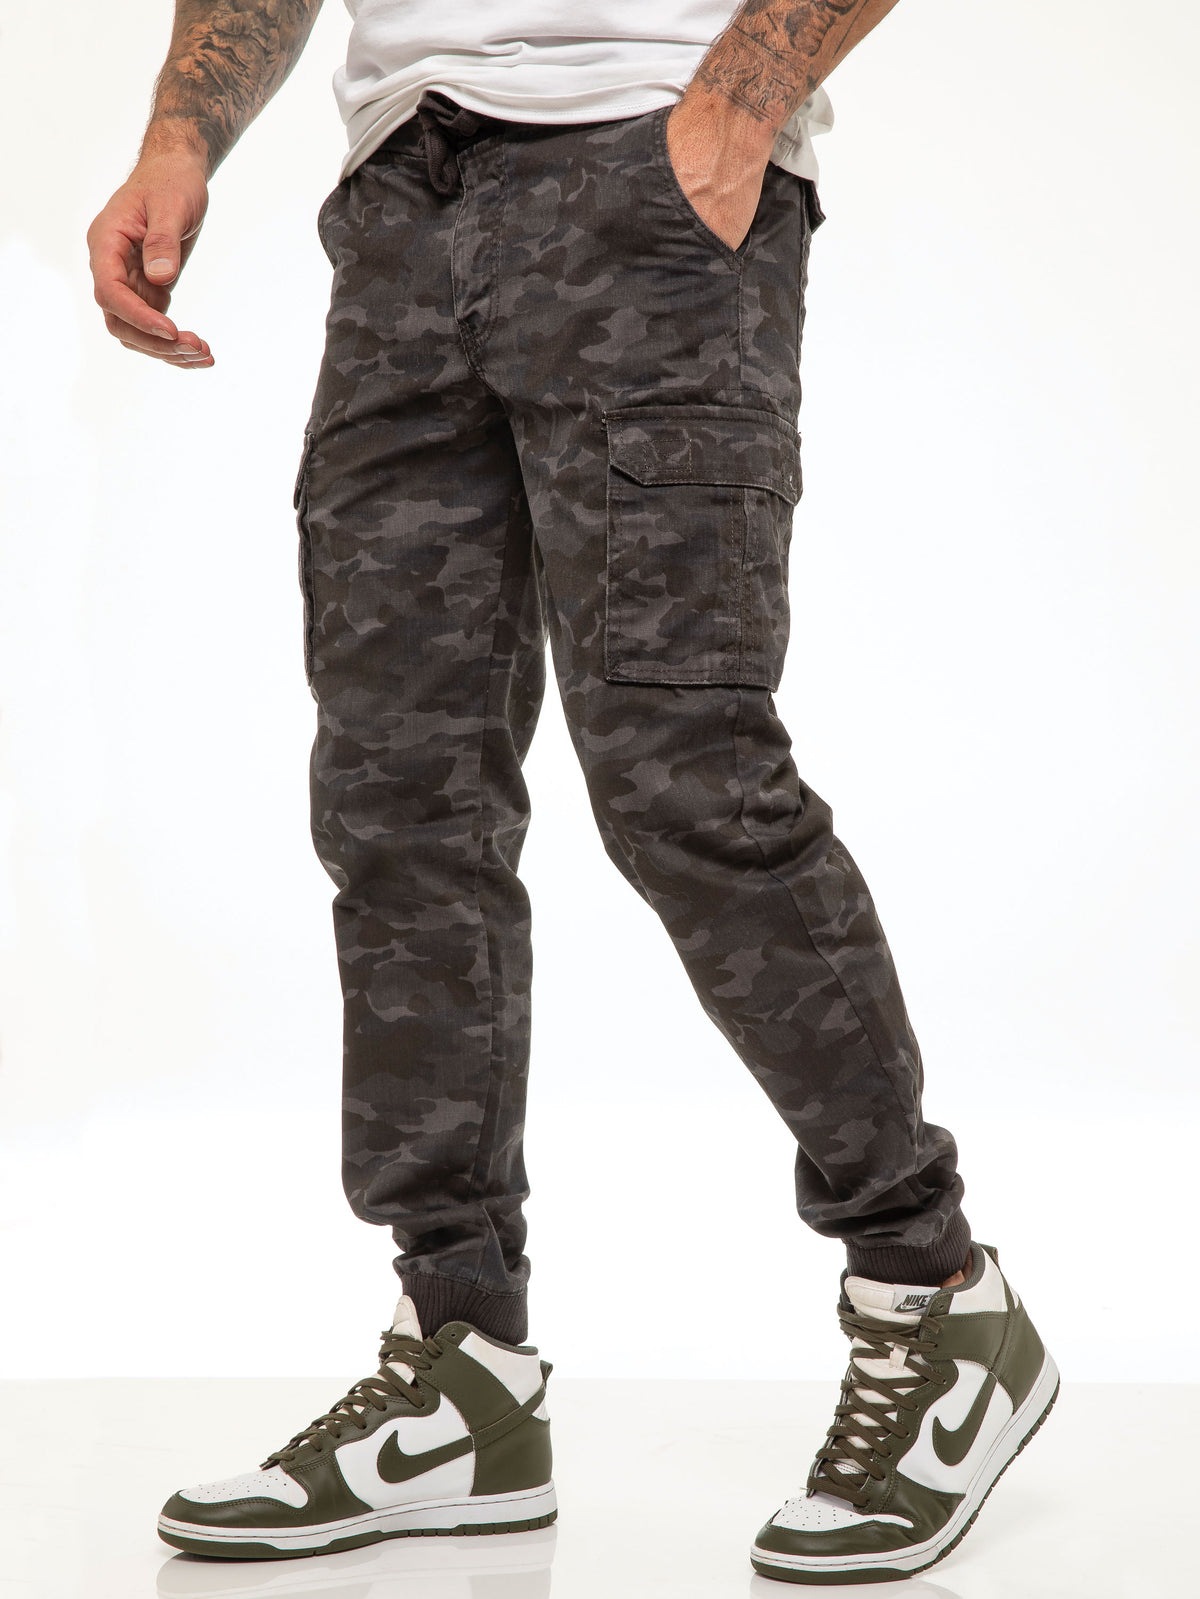 EZ409 ENZO Mens Military Combat Cuffed Camouflage Jeans ENZO RAWDENIM